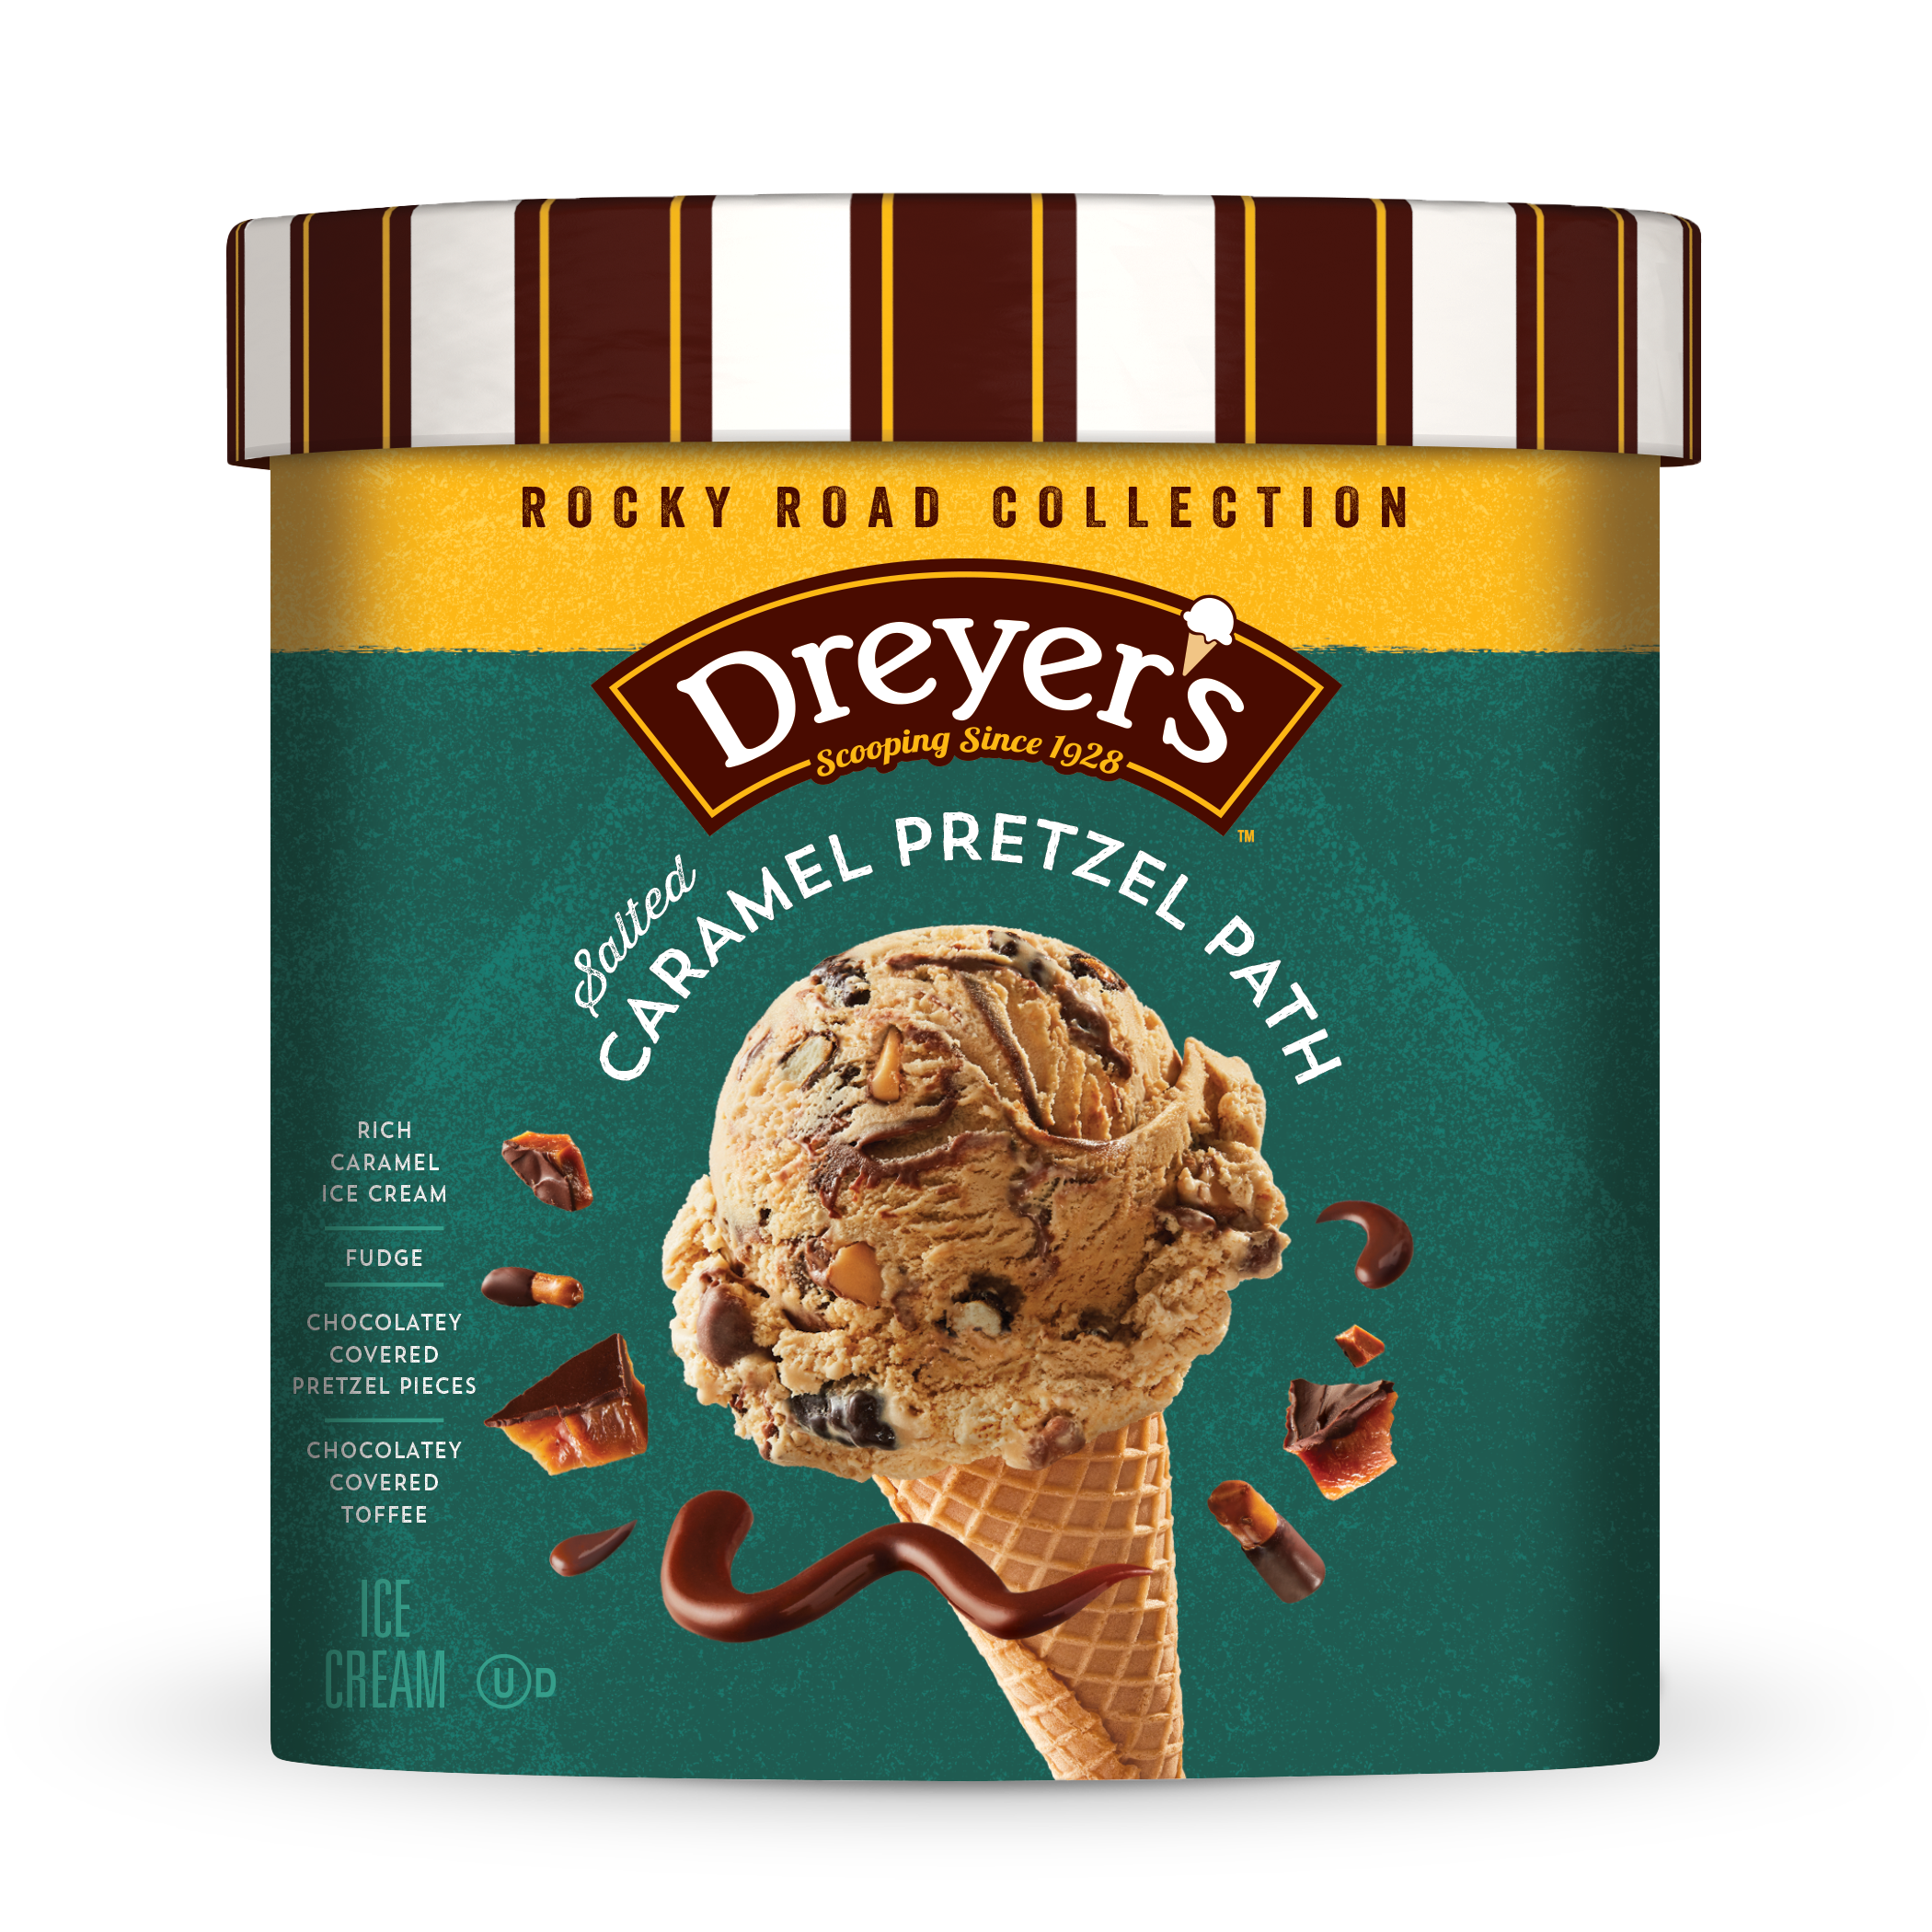 Carton of Dreyer's caramel pretzel ice cream